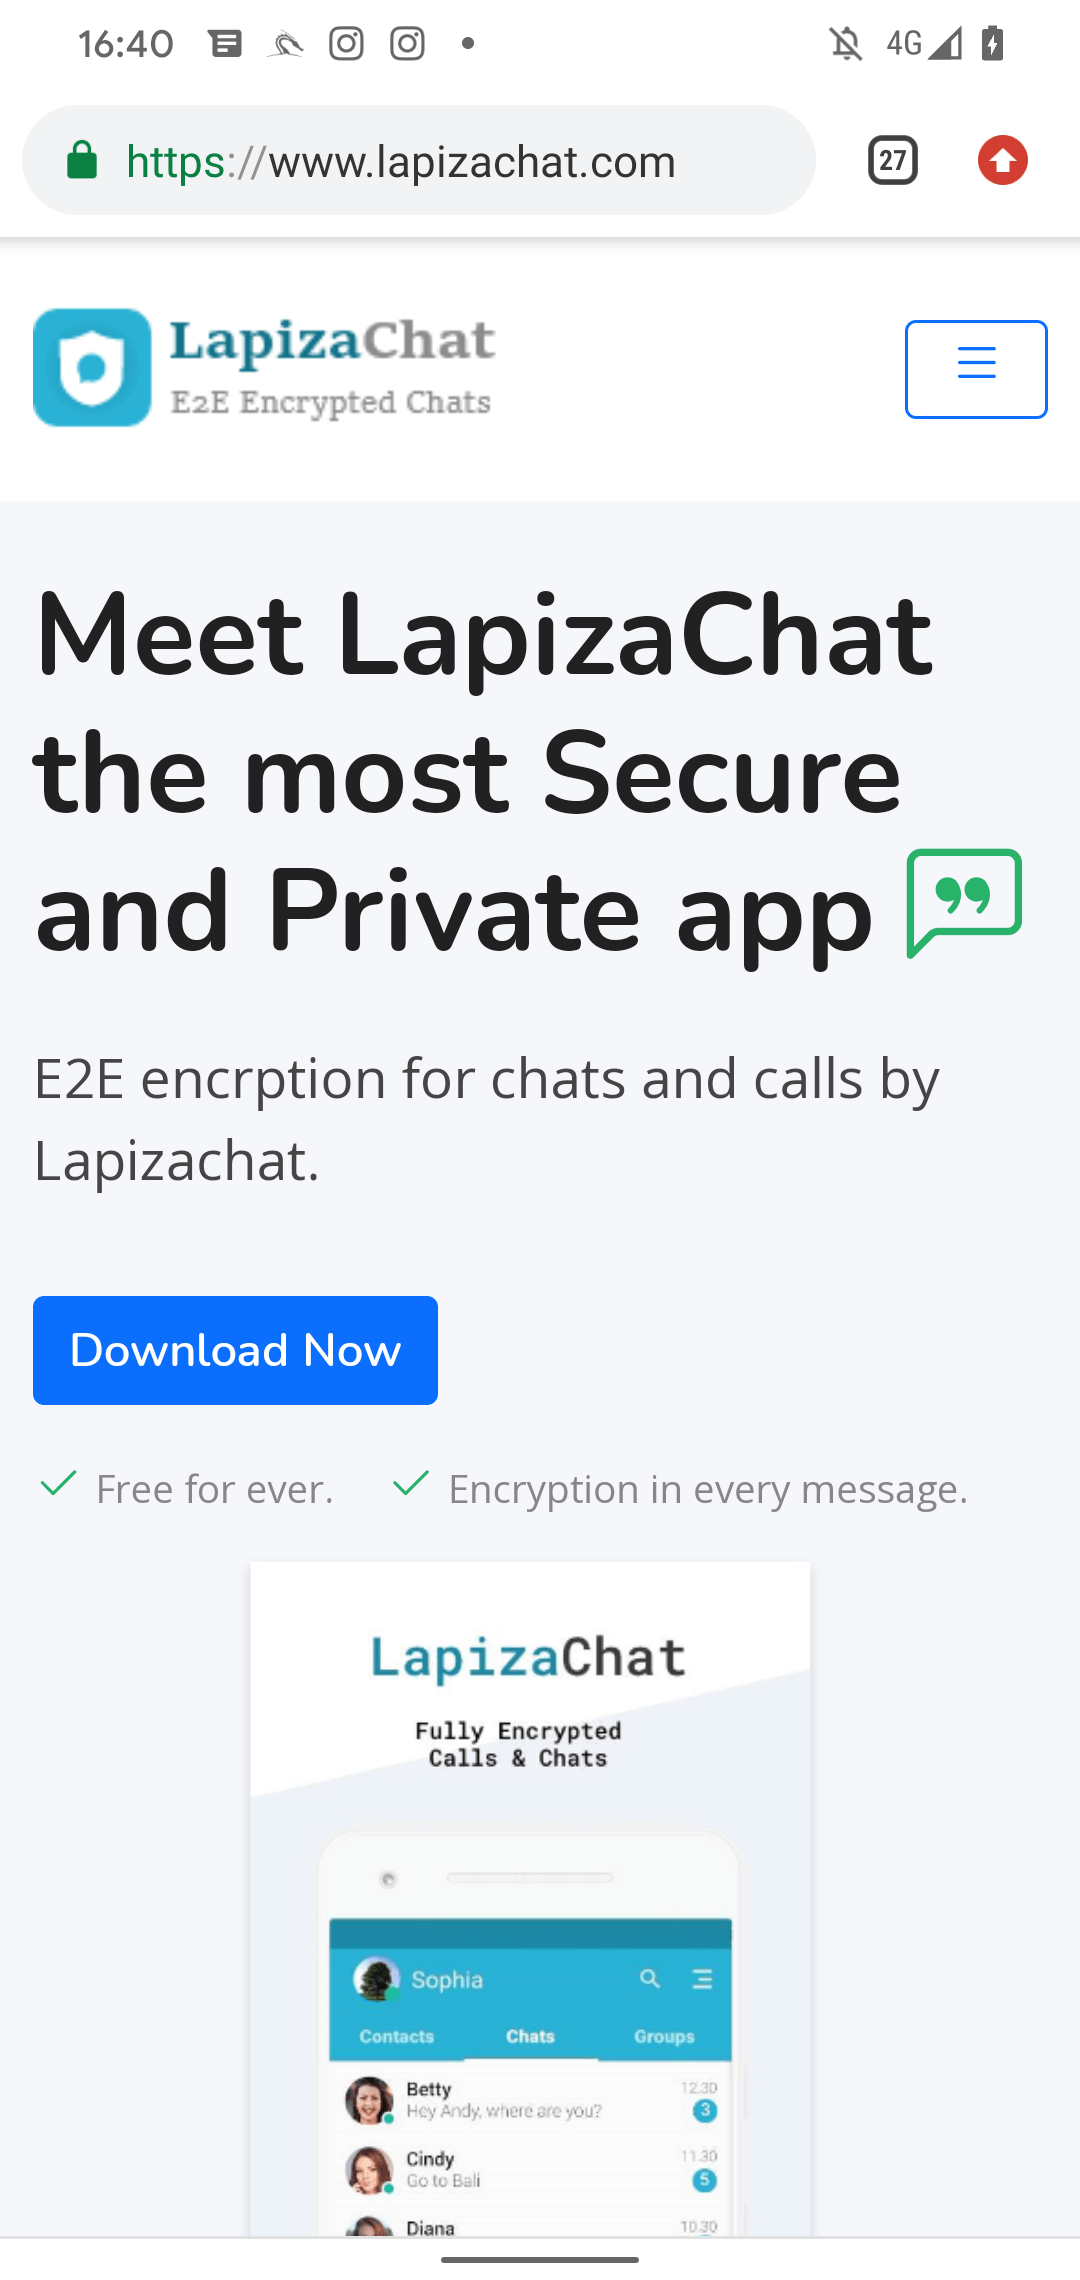 Figure 4. LapizaChat website